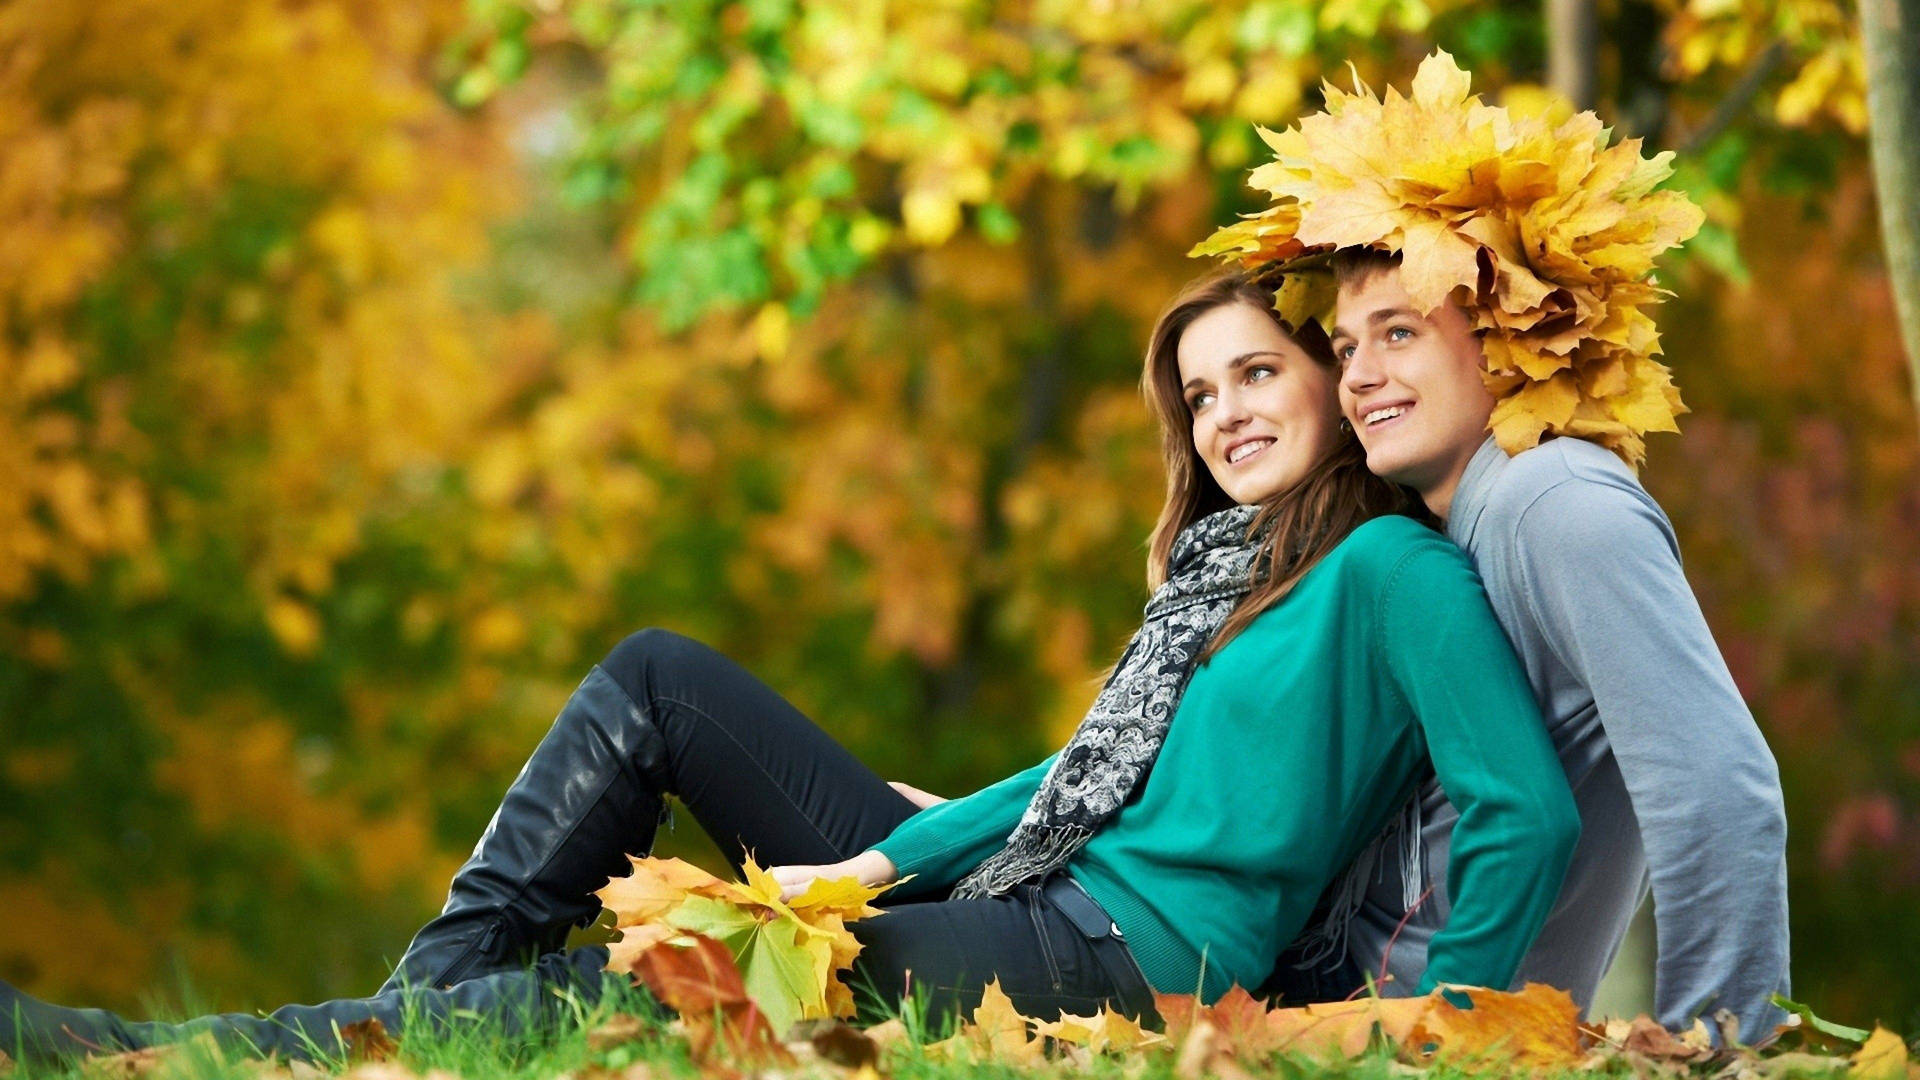 Couple Autumn Pictorial Wallpaper